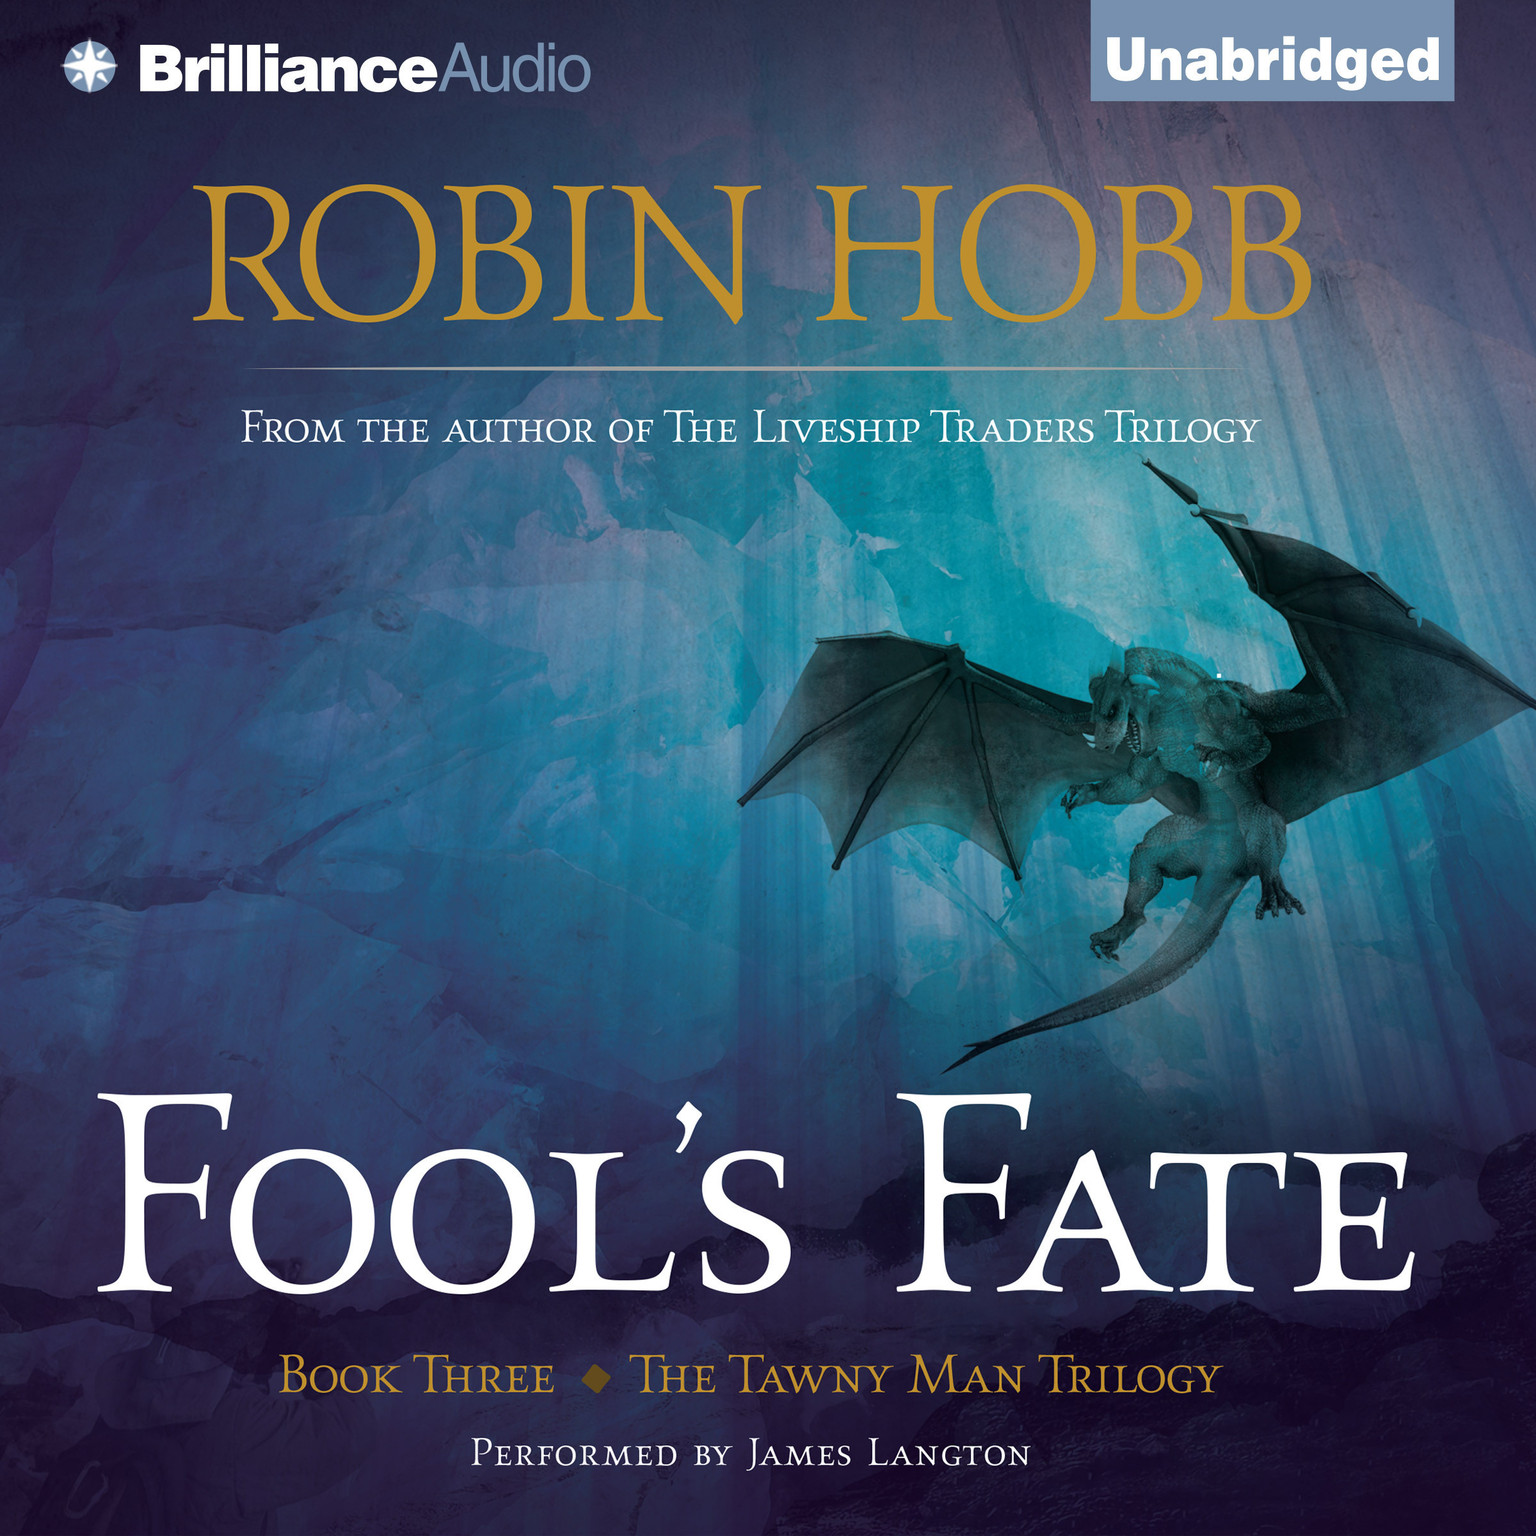 Robin hobb fools fate audio book james langton download torrent download